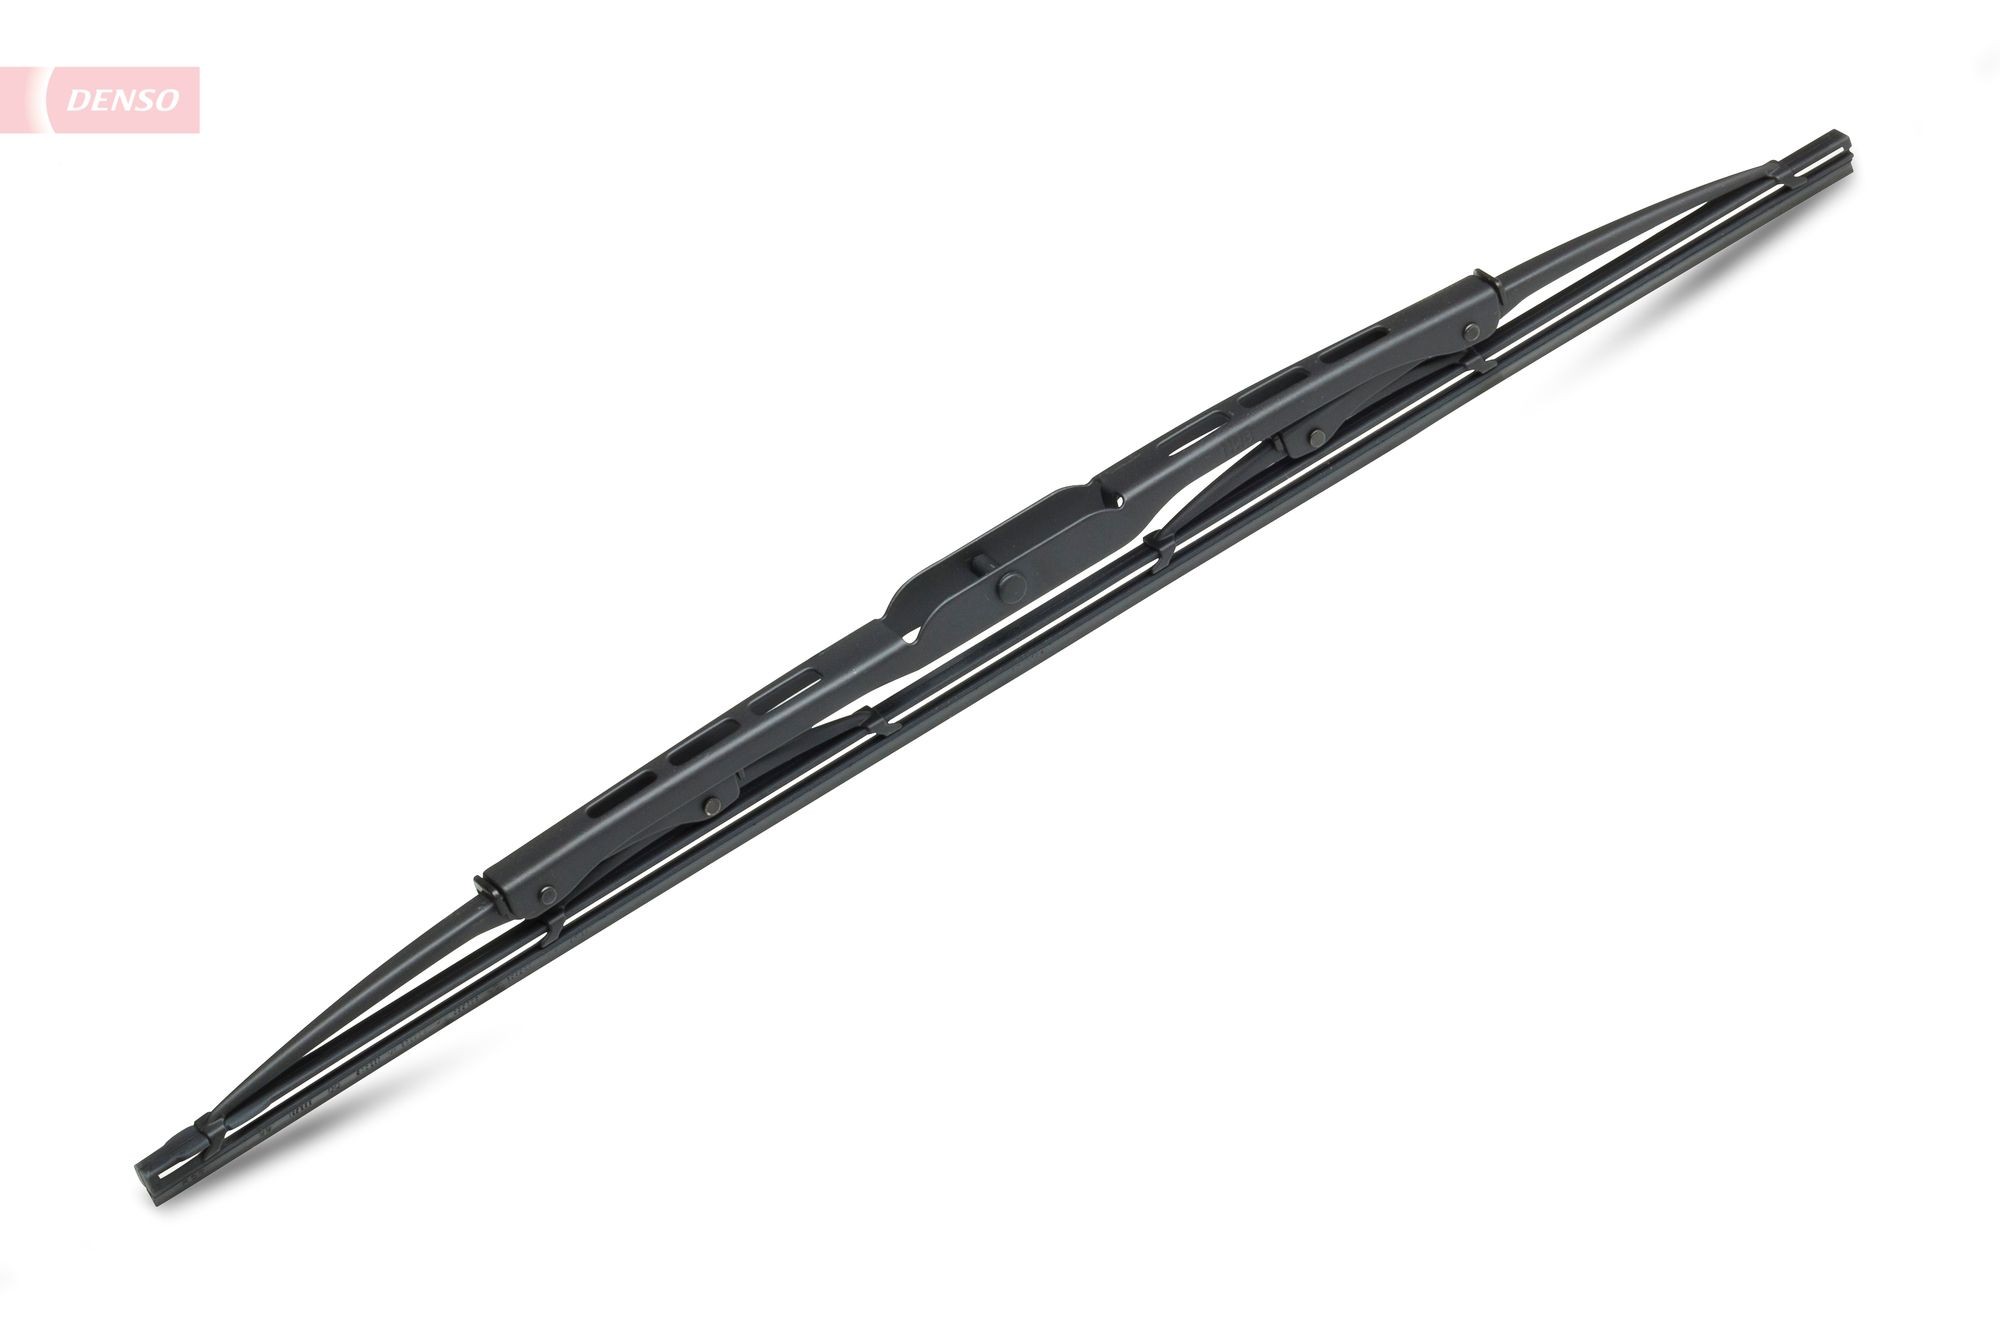 DENSO Standard 425 mm, Standard, 17 Inch Wiper blades DM-043 buy